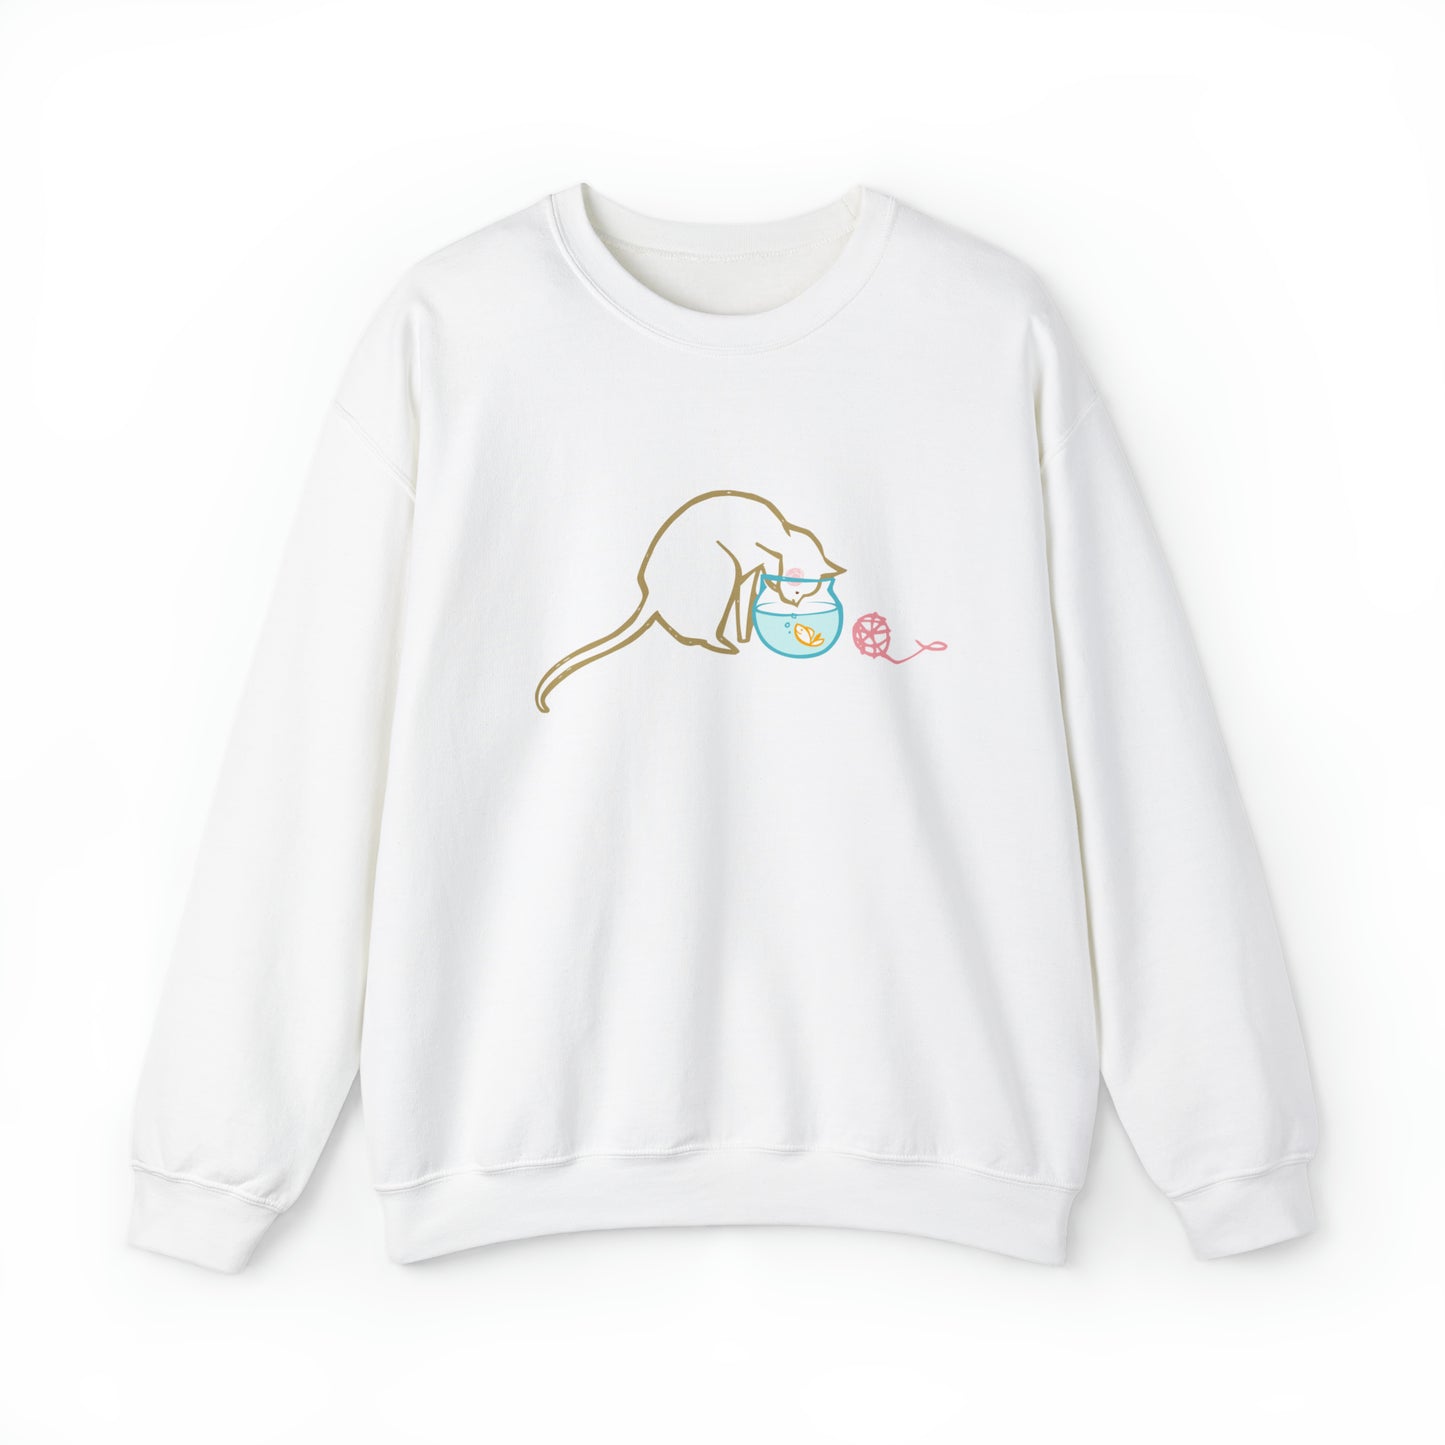 Cat & Fishbowl Heavy Blend Crewneck Sweatshirt